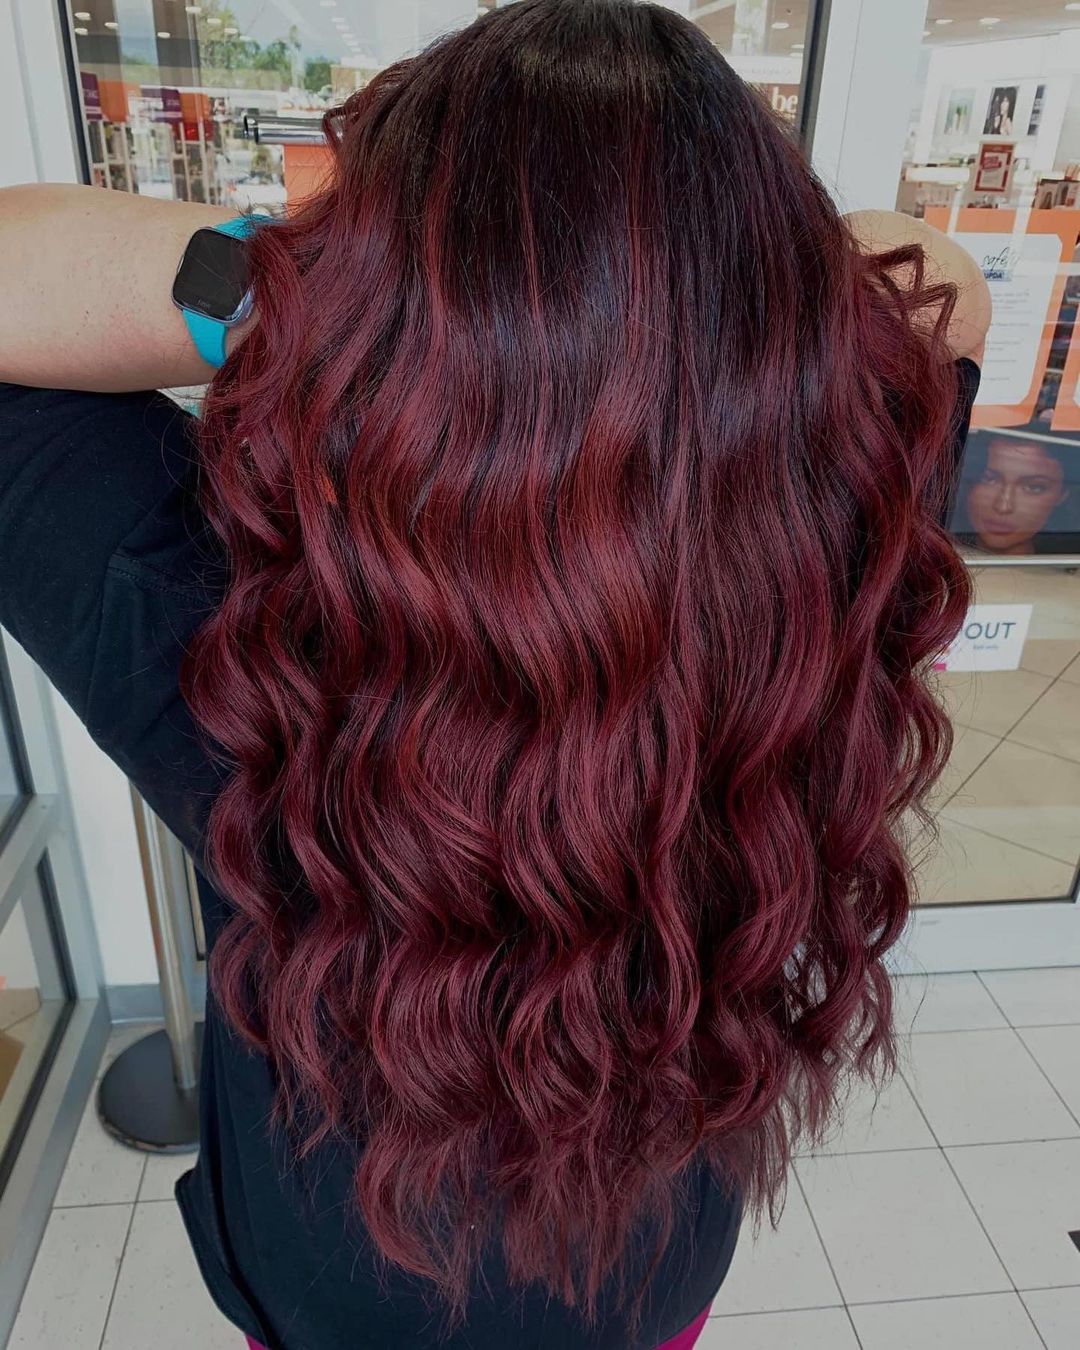 Black cherry coke hair color